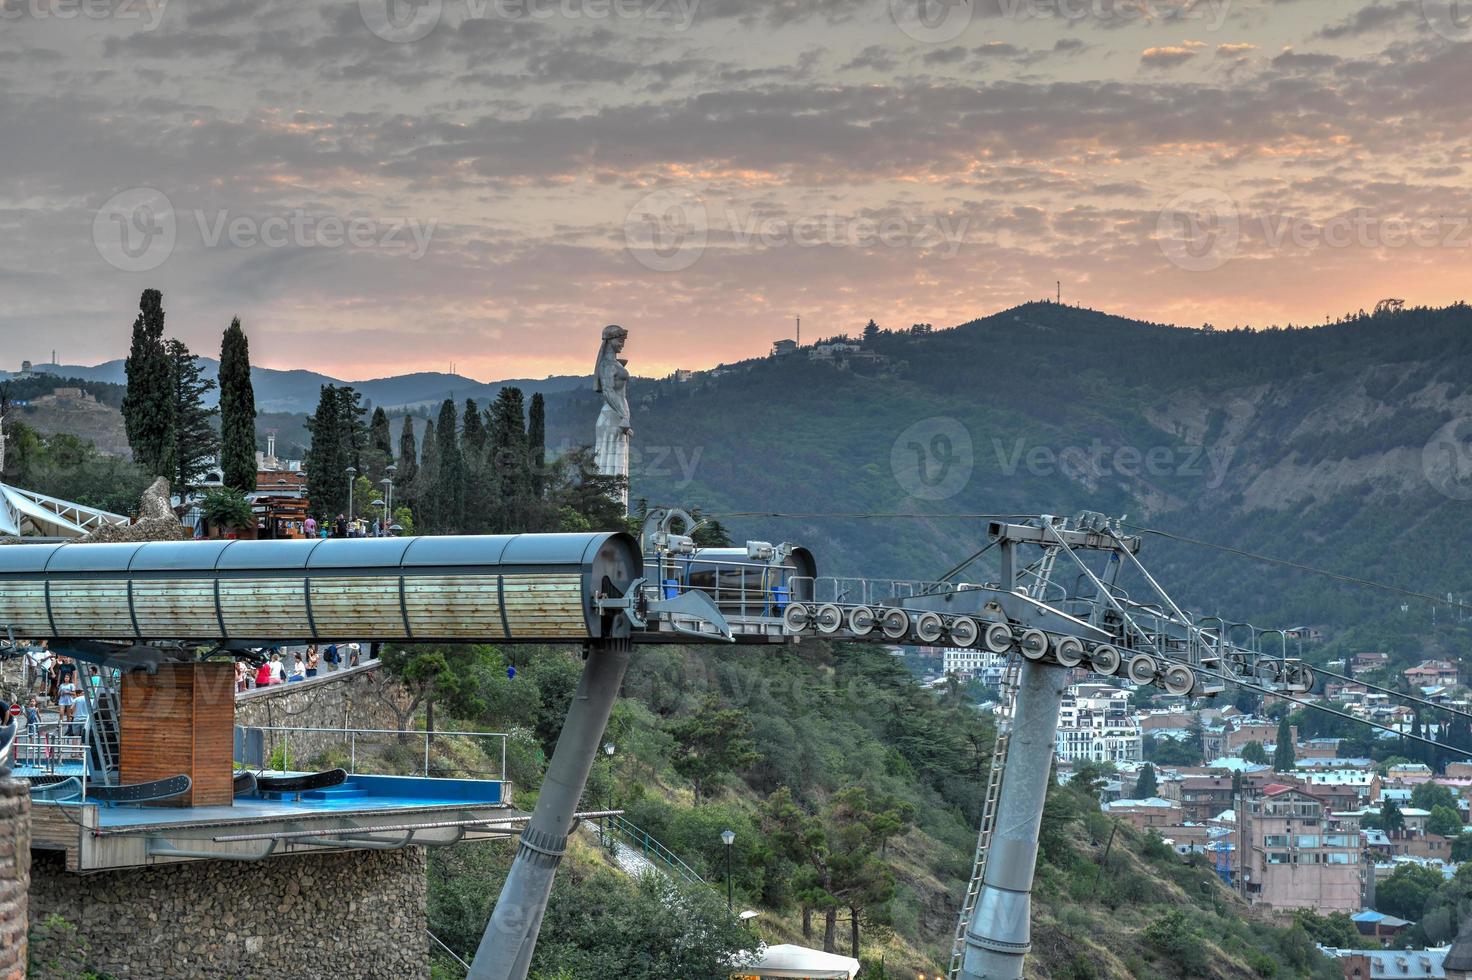 Beautiful panoramic view of Tbilisi from Narikala fortress in Georgia. photo